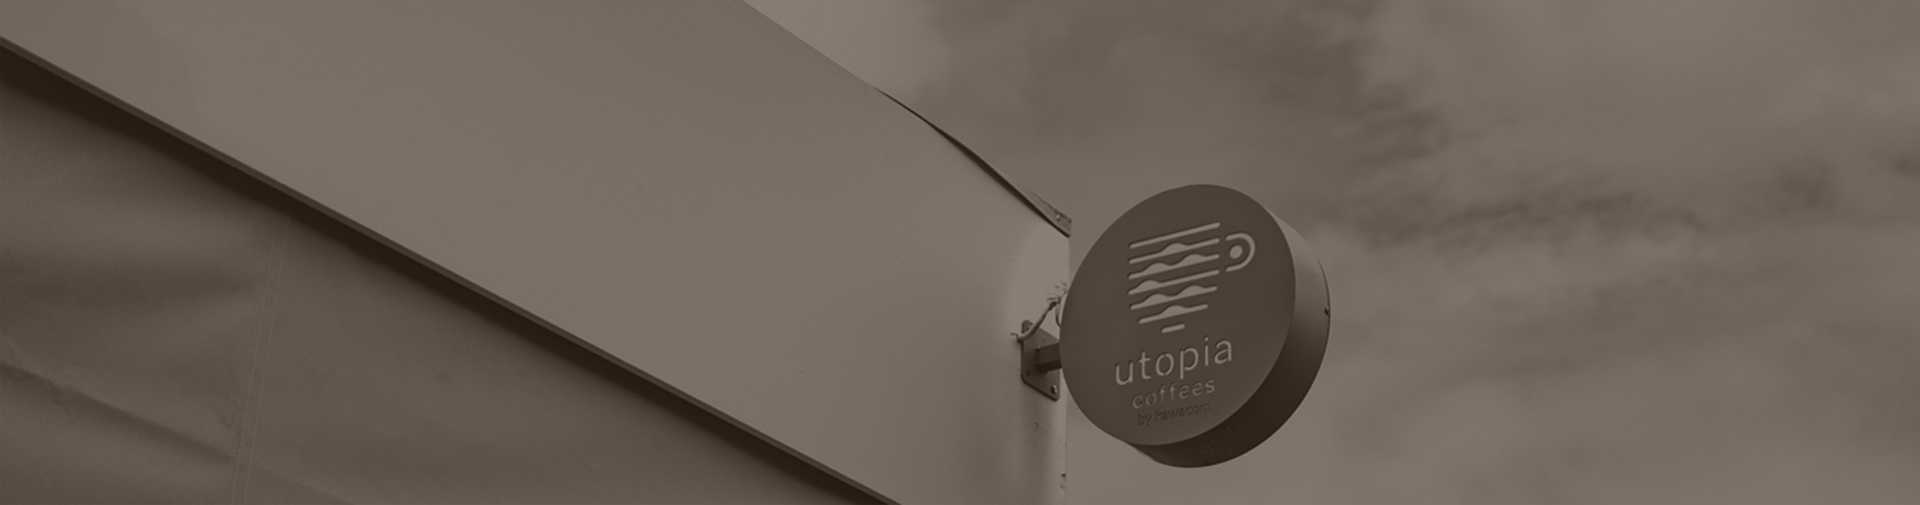 Utopia Espresso από επιλεγμένες φάρμες καφέ